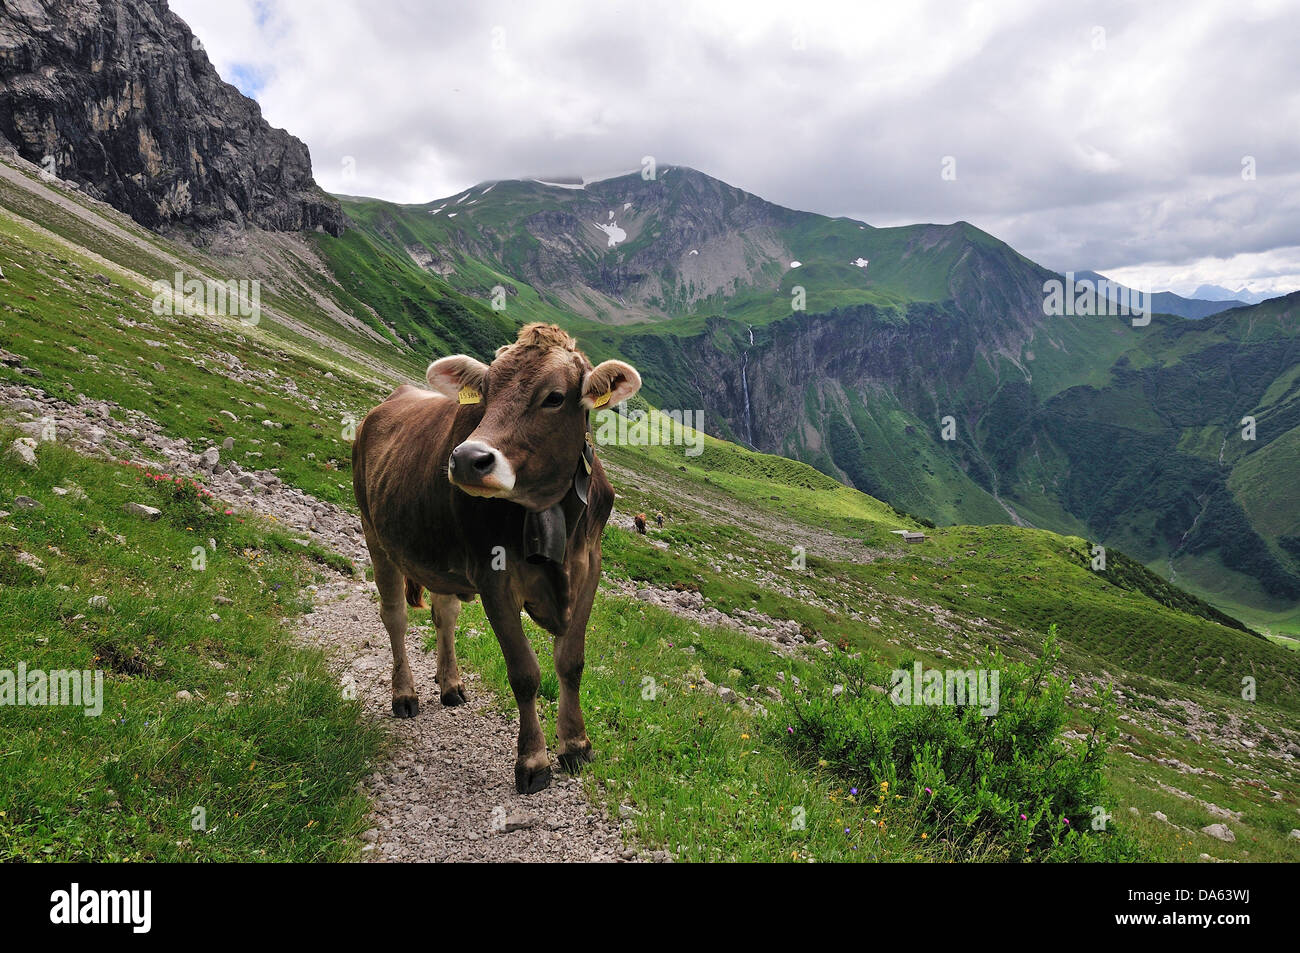 young, bovine animal, cow, animal, Bos primigenius taurus, Oytal, Oberstdorf, Allgäu, Alps, Bavaria, Germany, Europe, agricultur Stock Photo